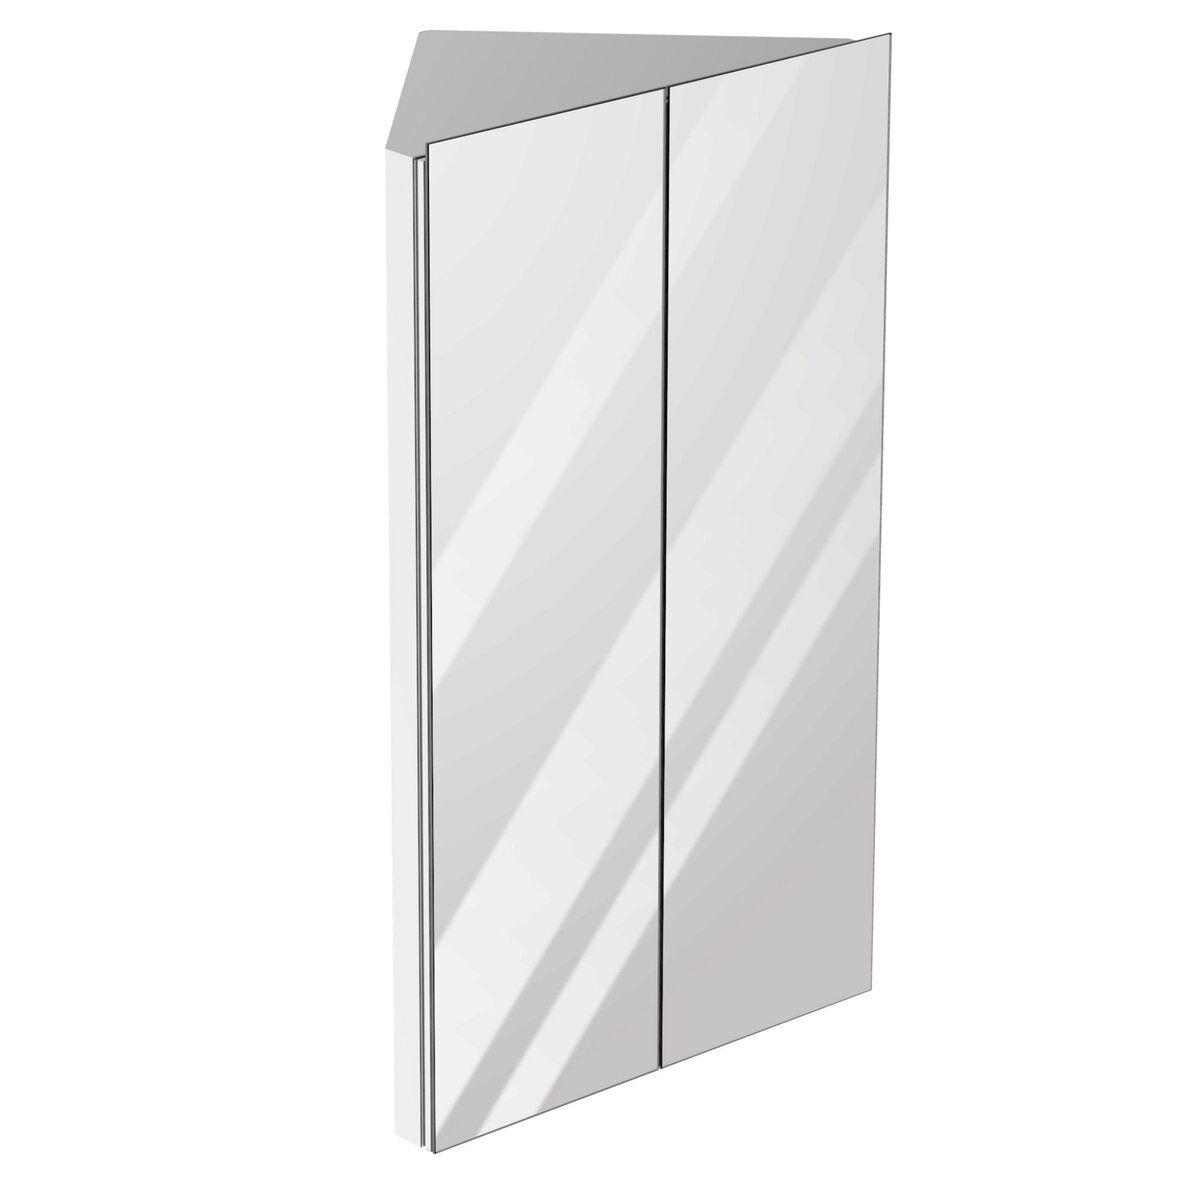 Miroir pour angle angolo cadre aluminium couleur blanc 20101002342 -  Conforama